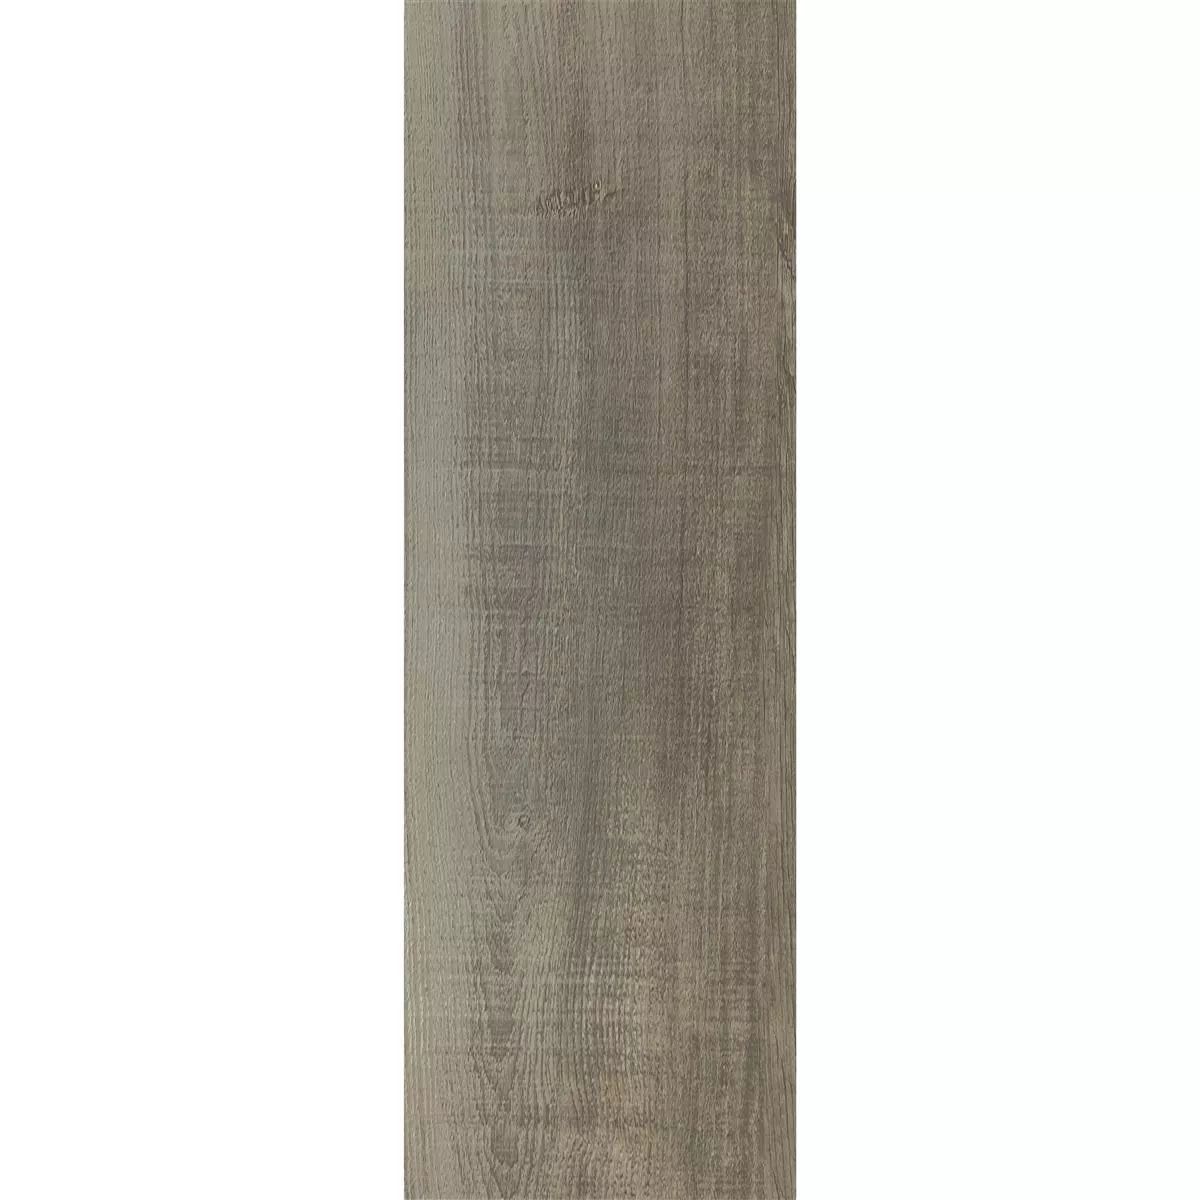 Vinylboden Klicksystem Cologne Taupe 17,2x121cm